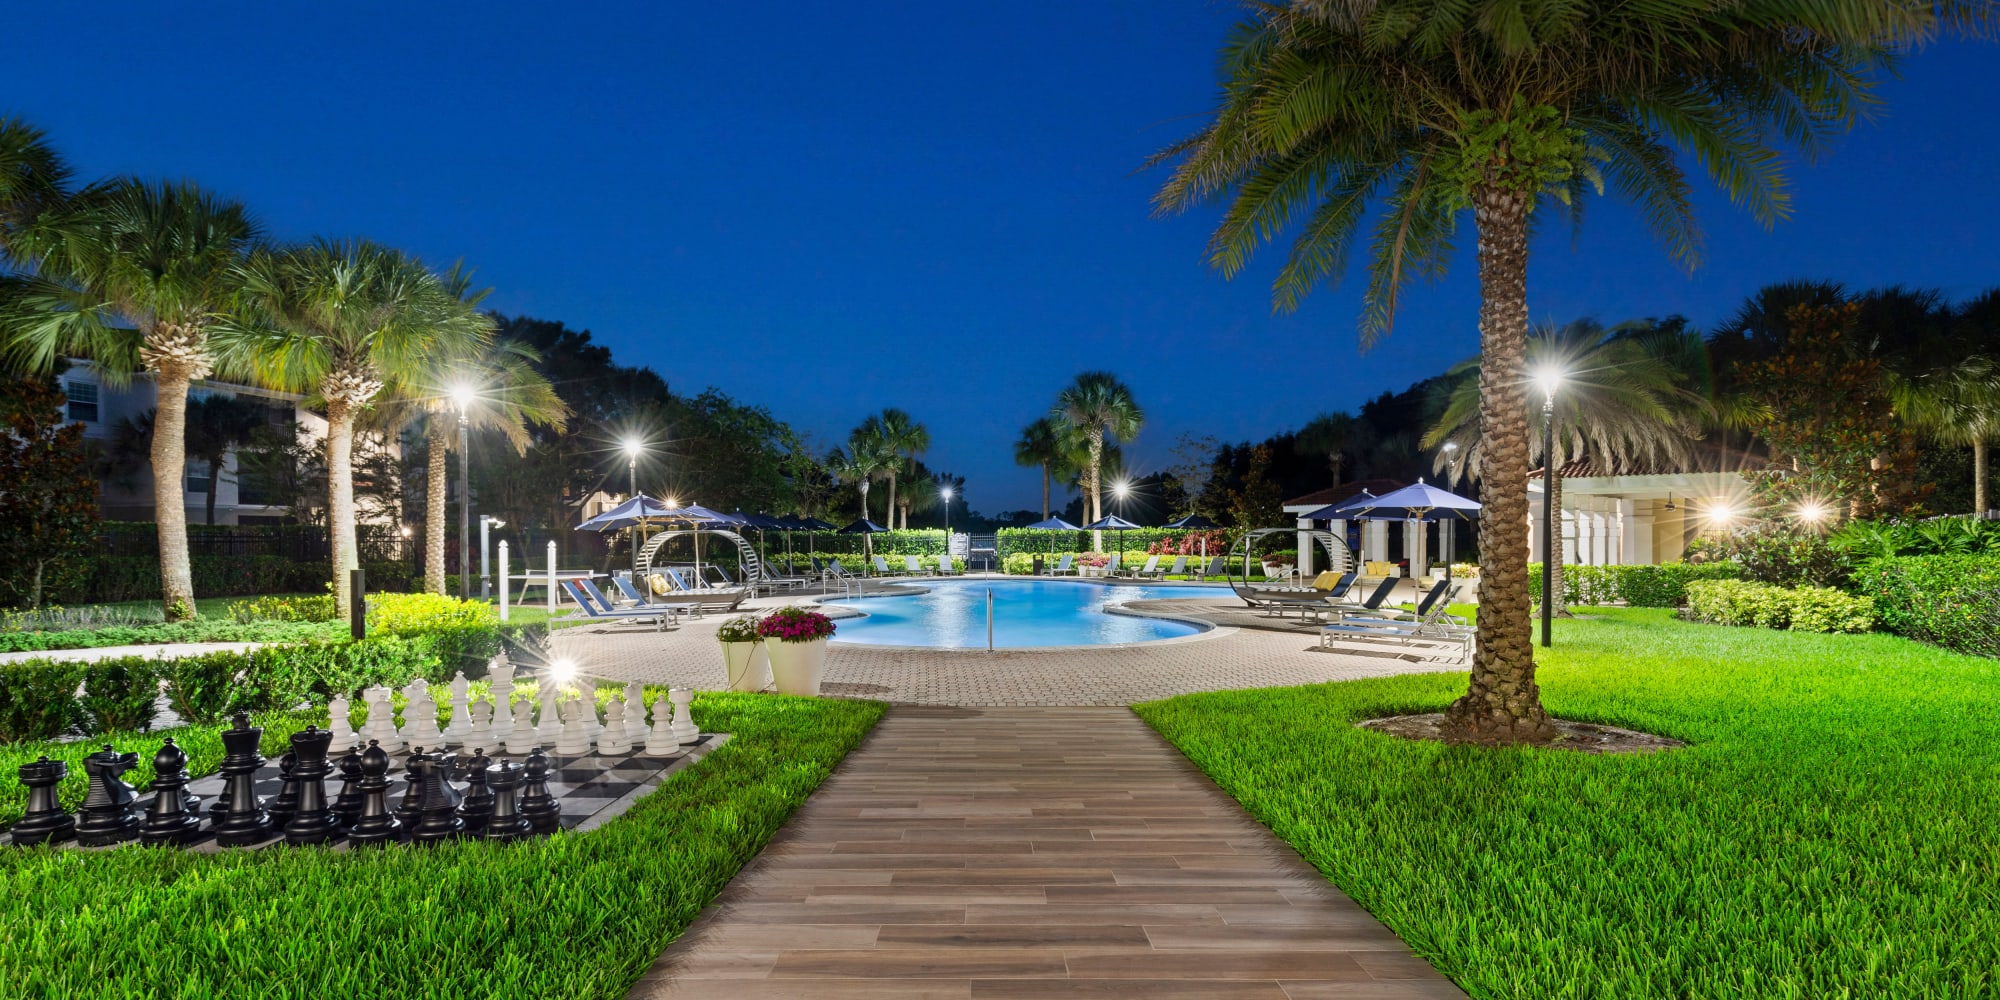 Swimming pool at night at Harbortown Apartments in Orlando, Florida